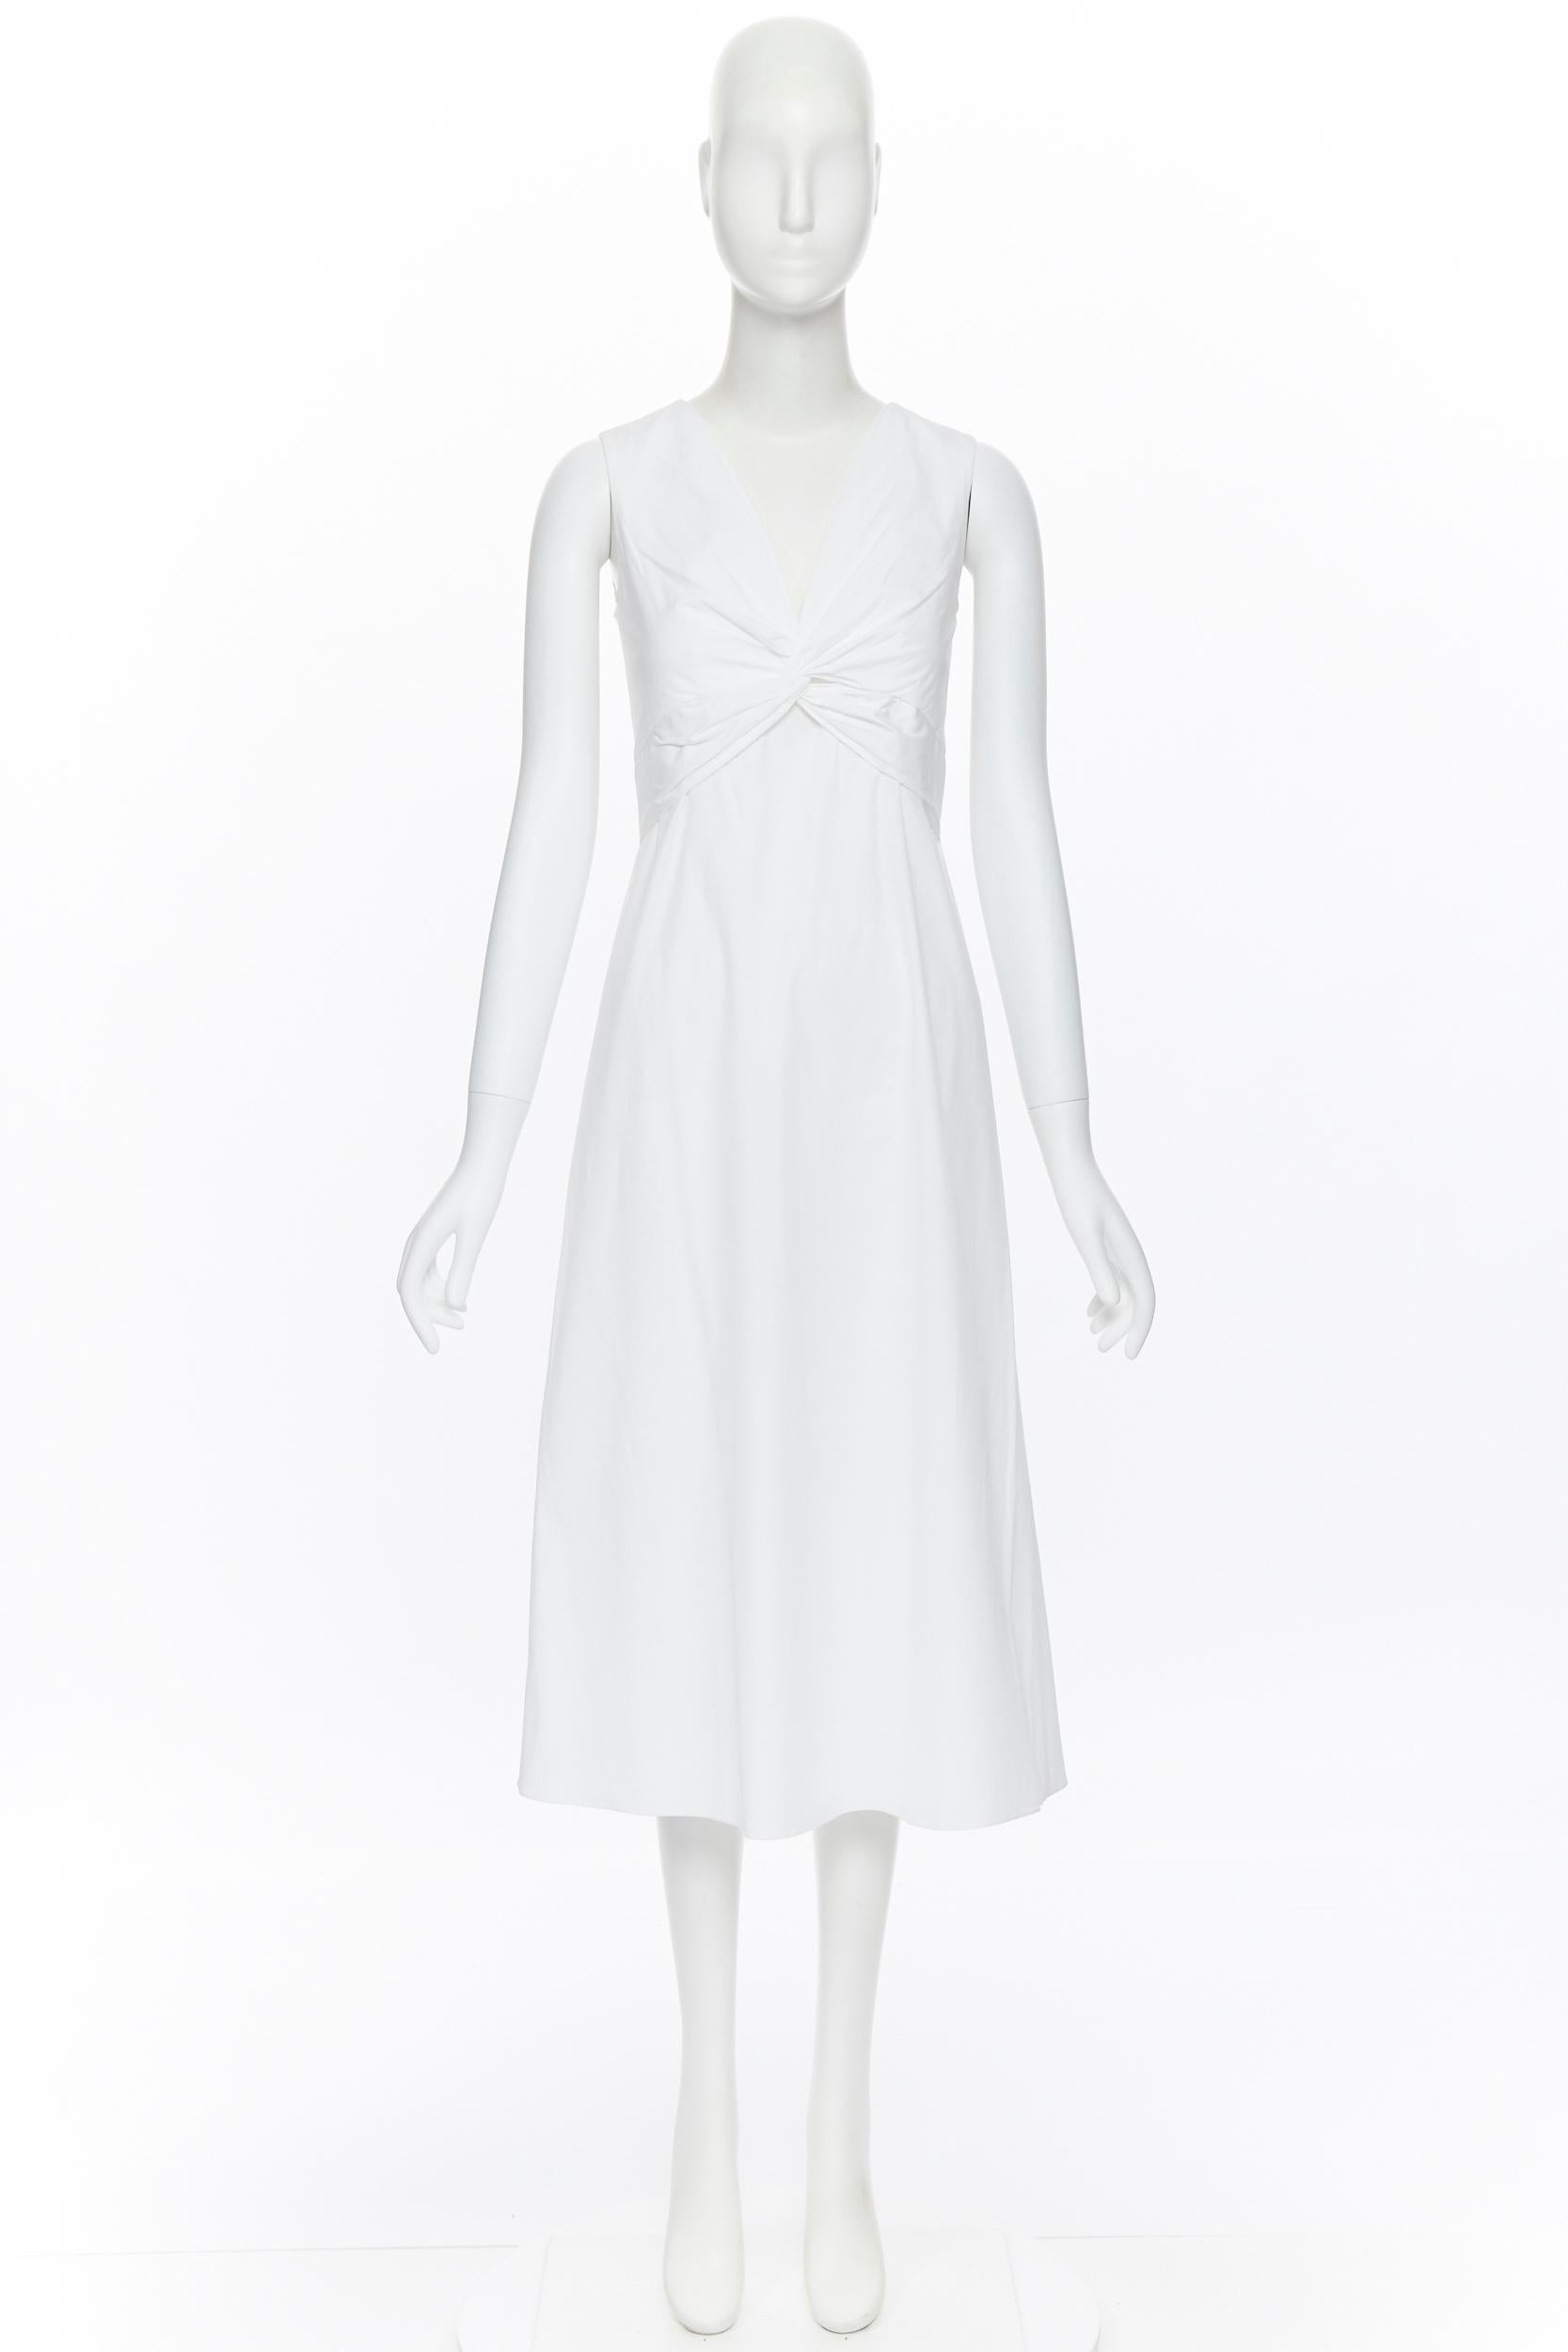 the row white dress